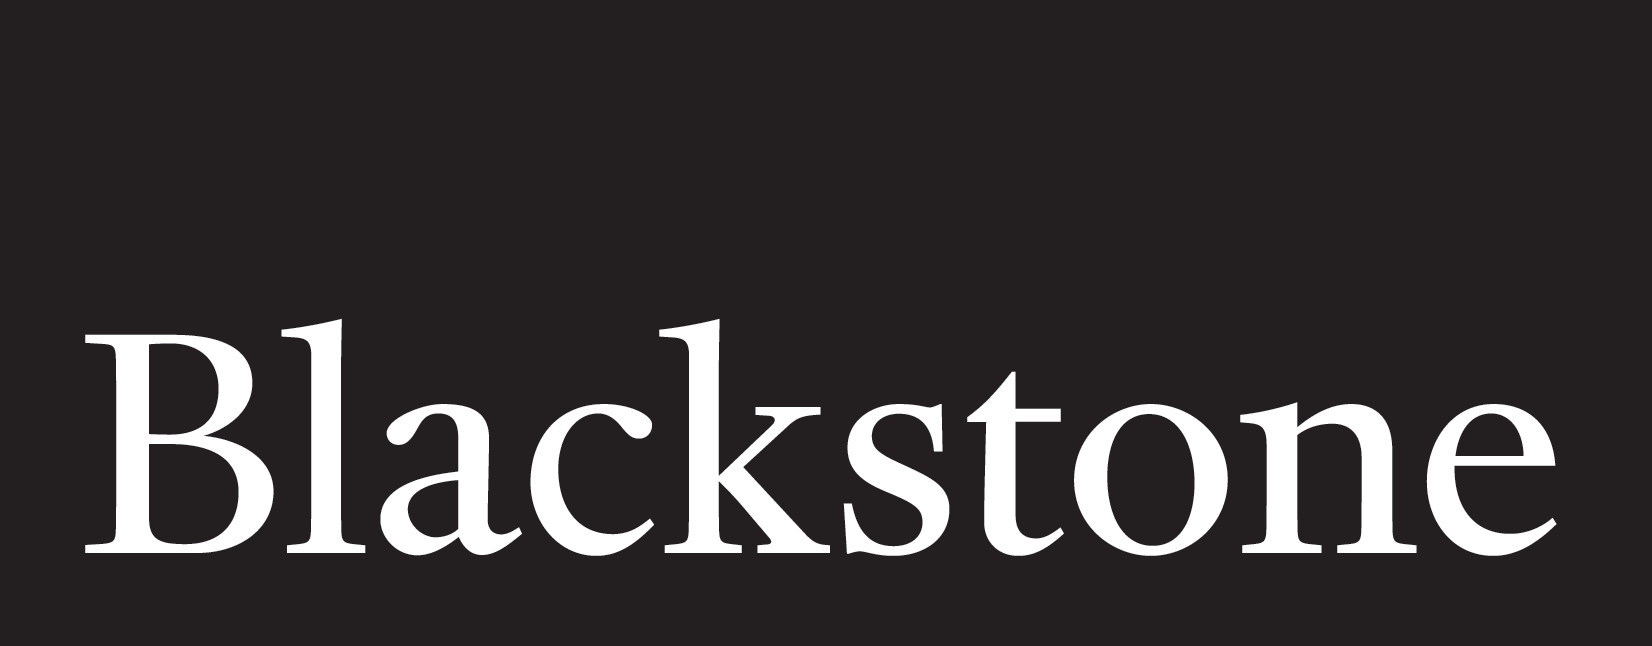 Blackstone-PRESS-QUALITY-6312.png